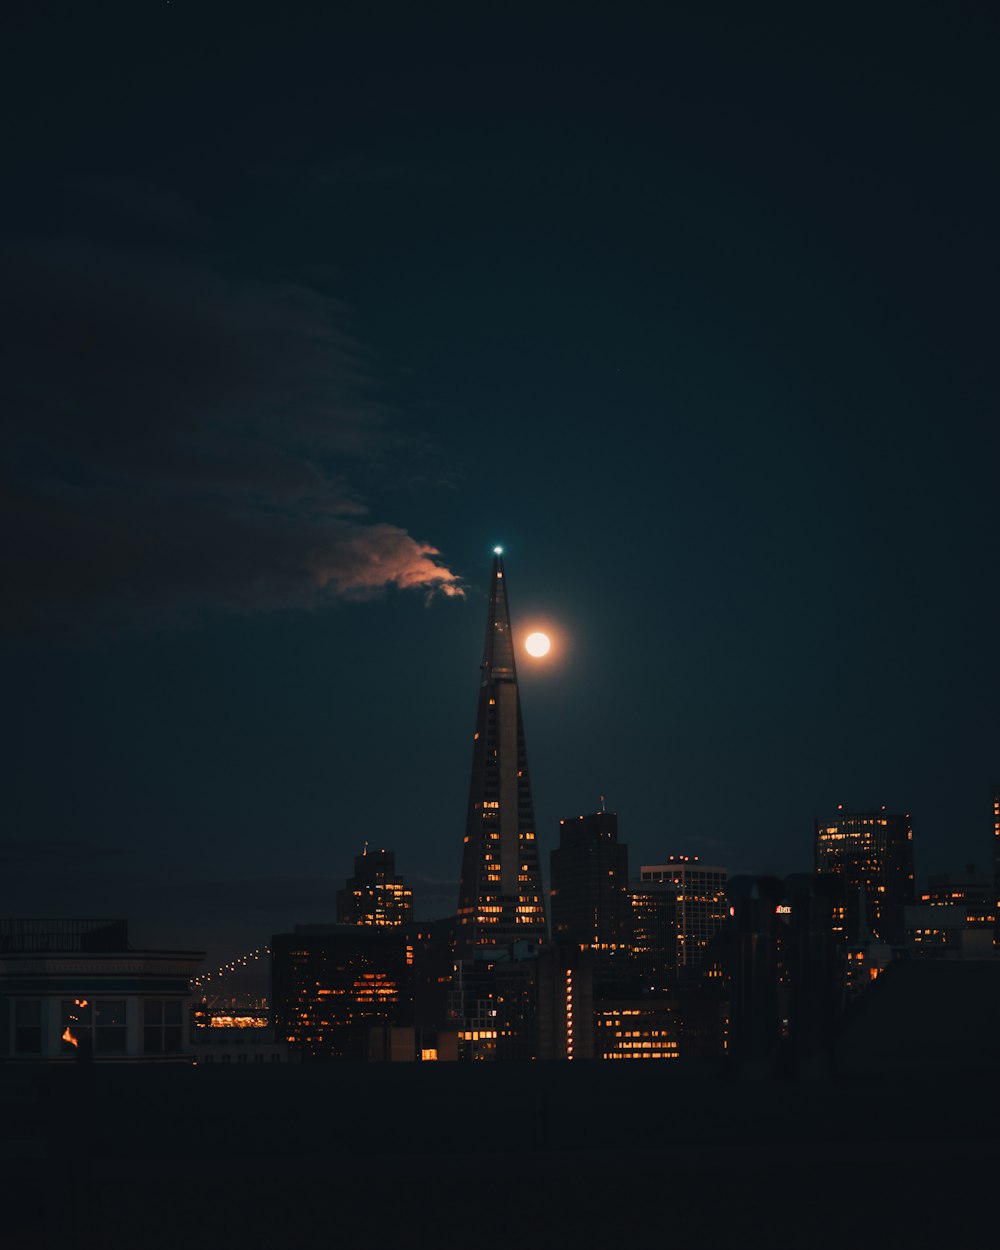 una luna piena che sorge su una città di notte